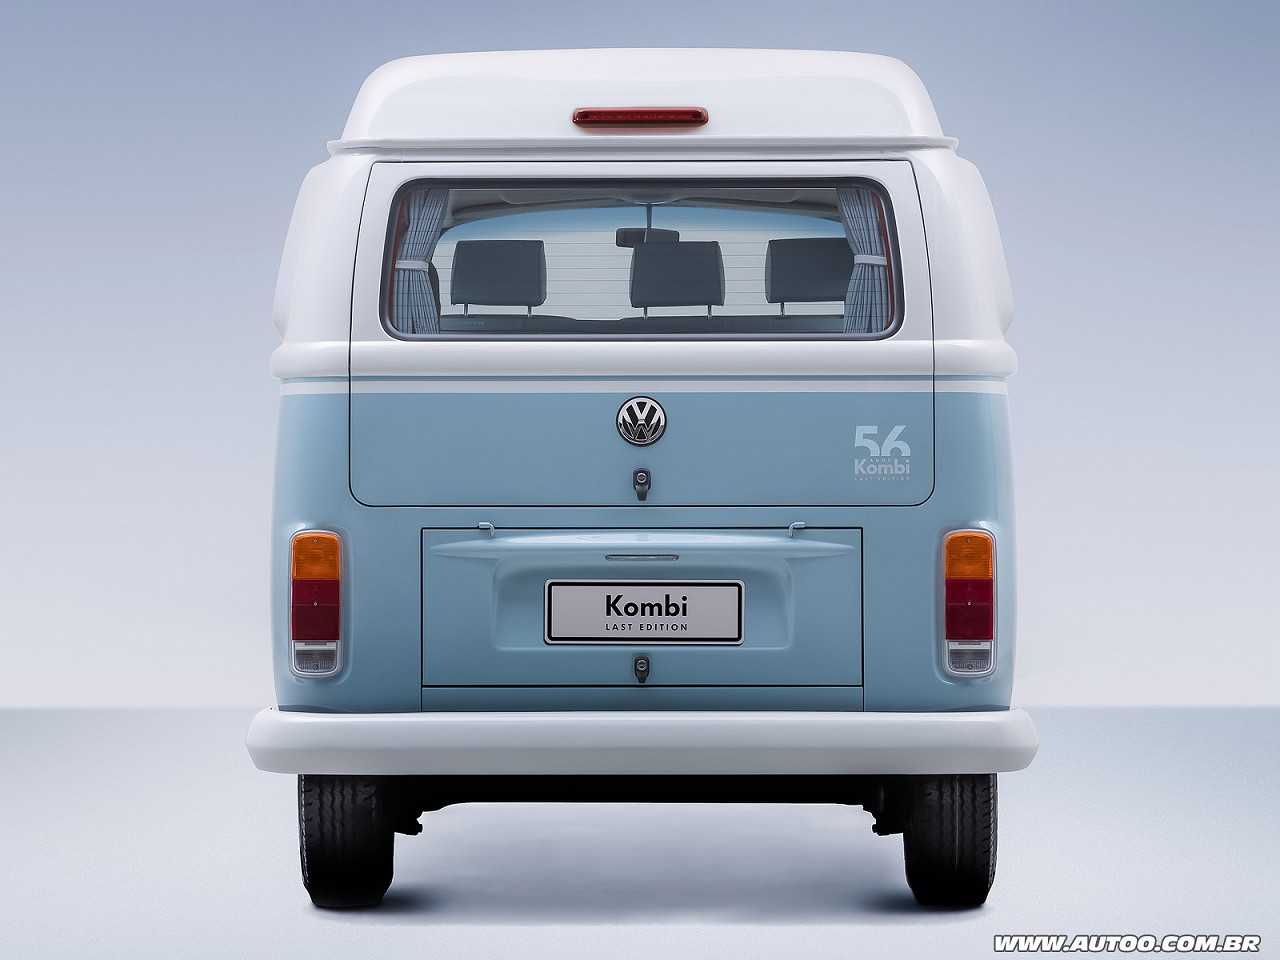 VolkswagenKombi 2014 - traseira